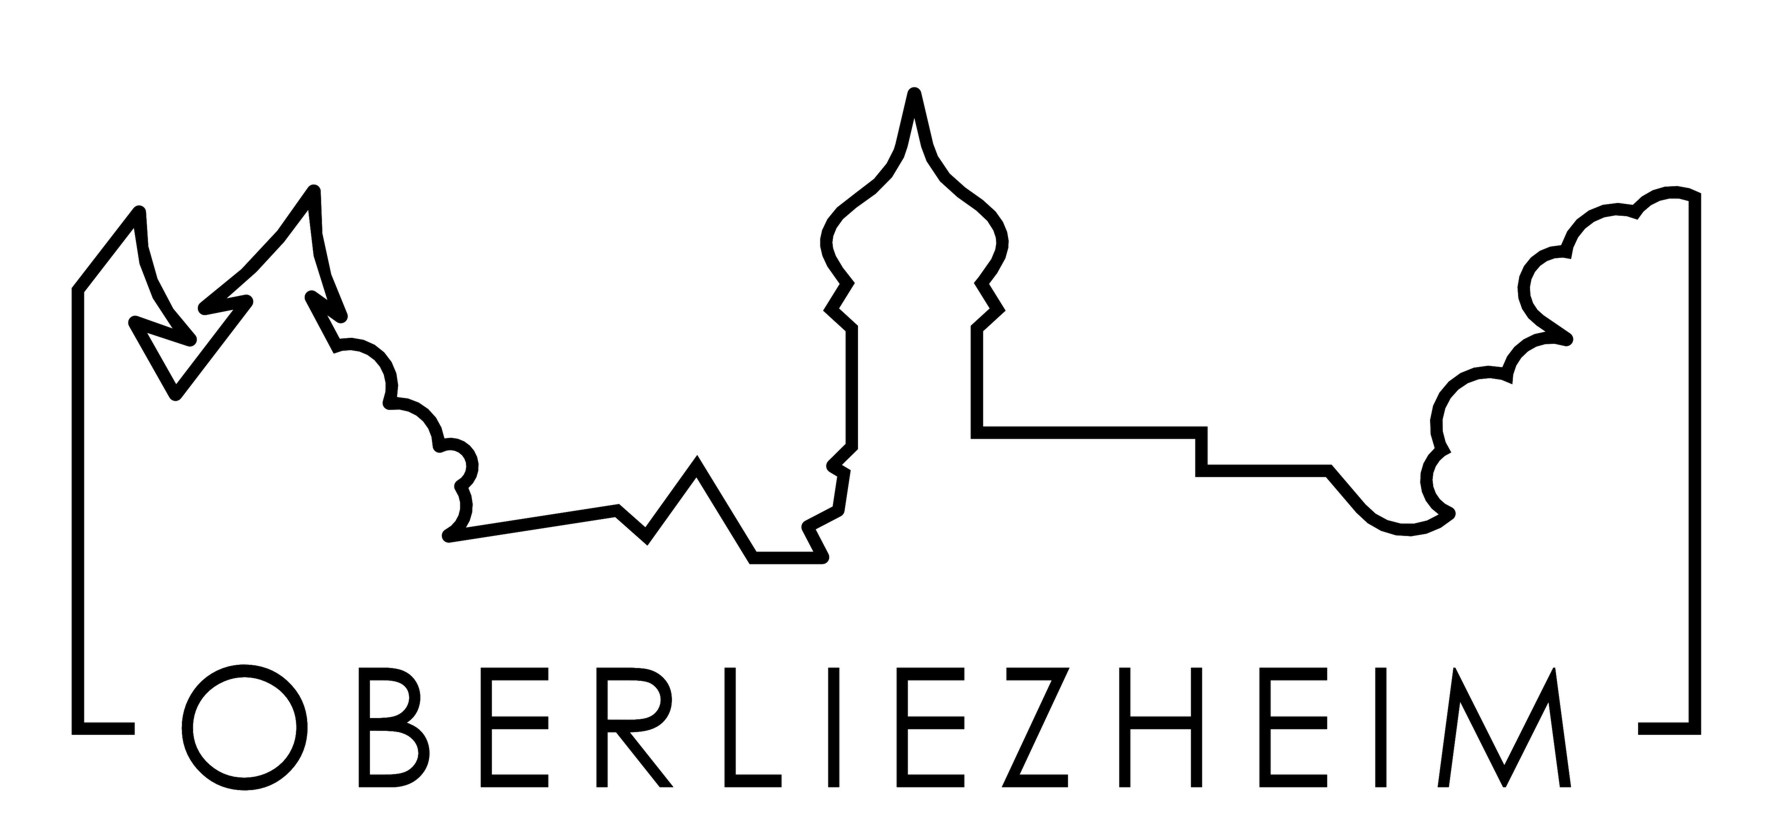 Oberliezheim